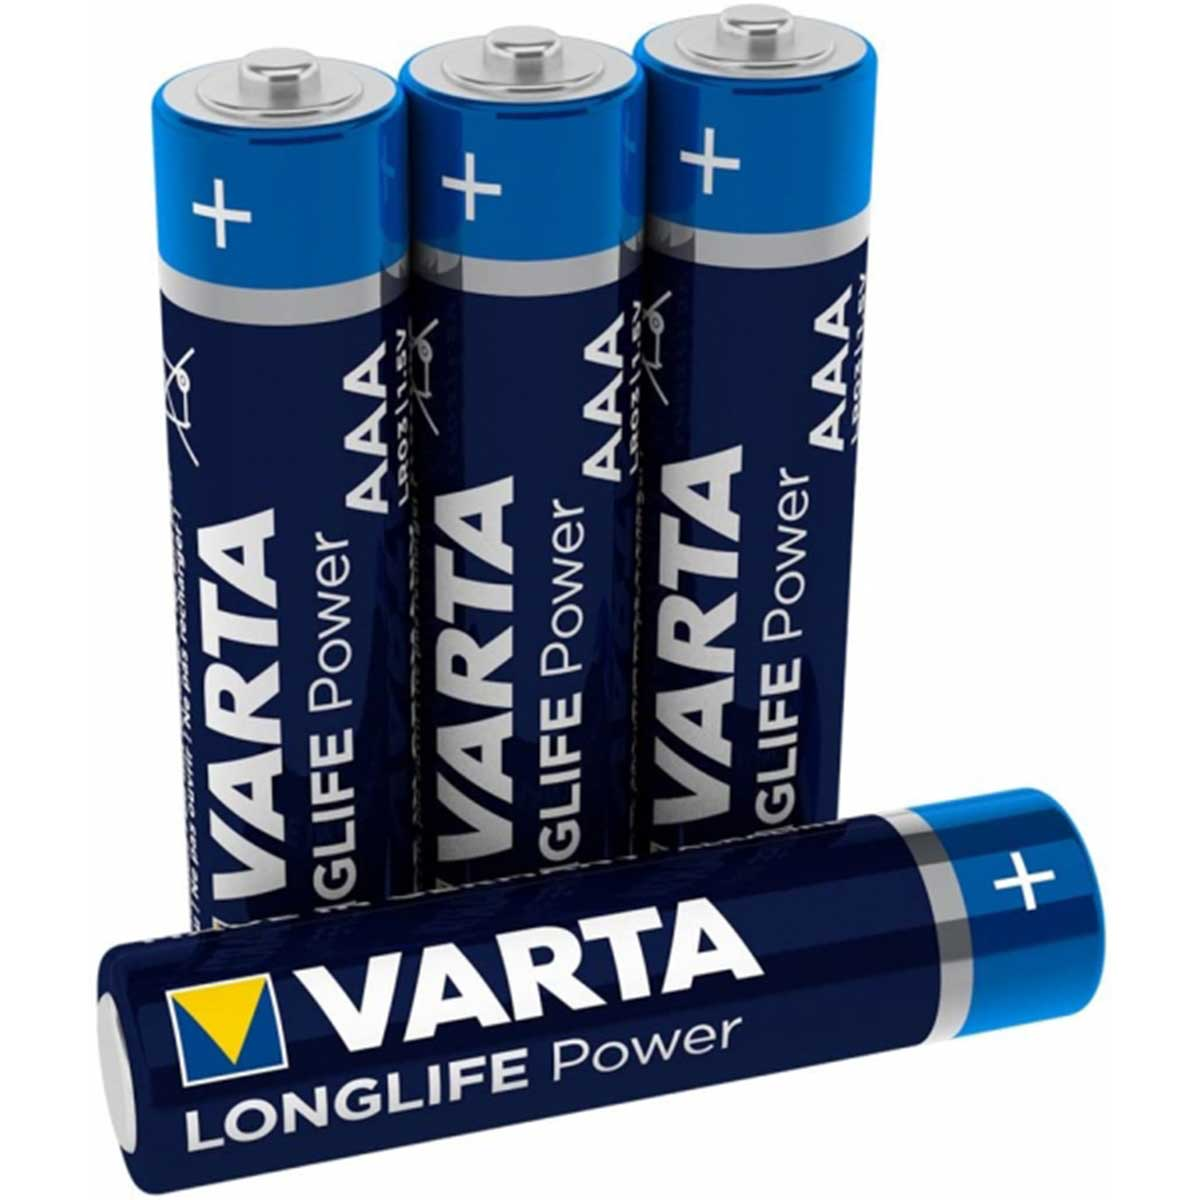 Pila Varta Aaa 1.5 longlife power micro lr03 paquete de 4 unidades blister alcalinas blx4 high lr3 49034b